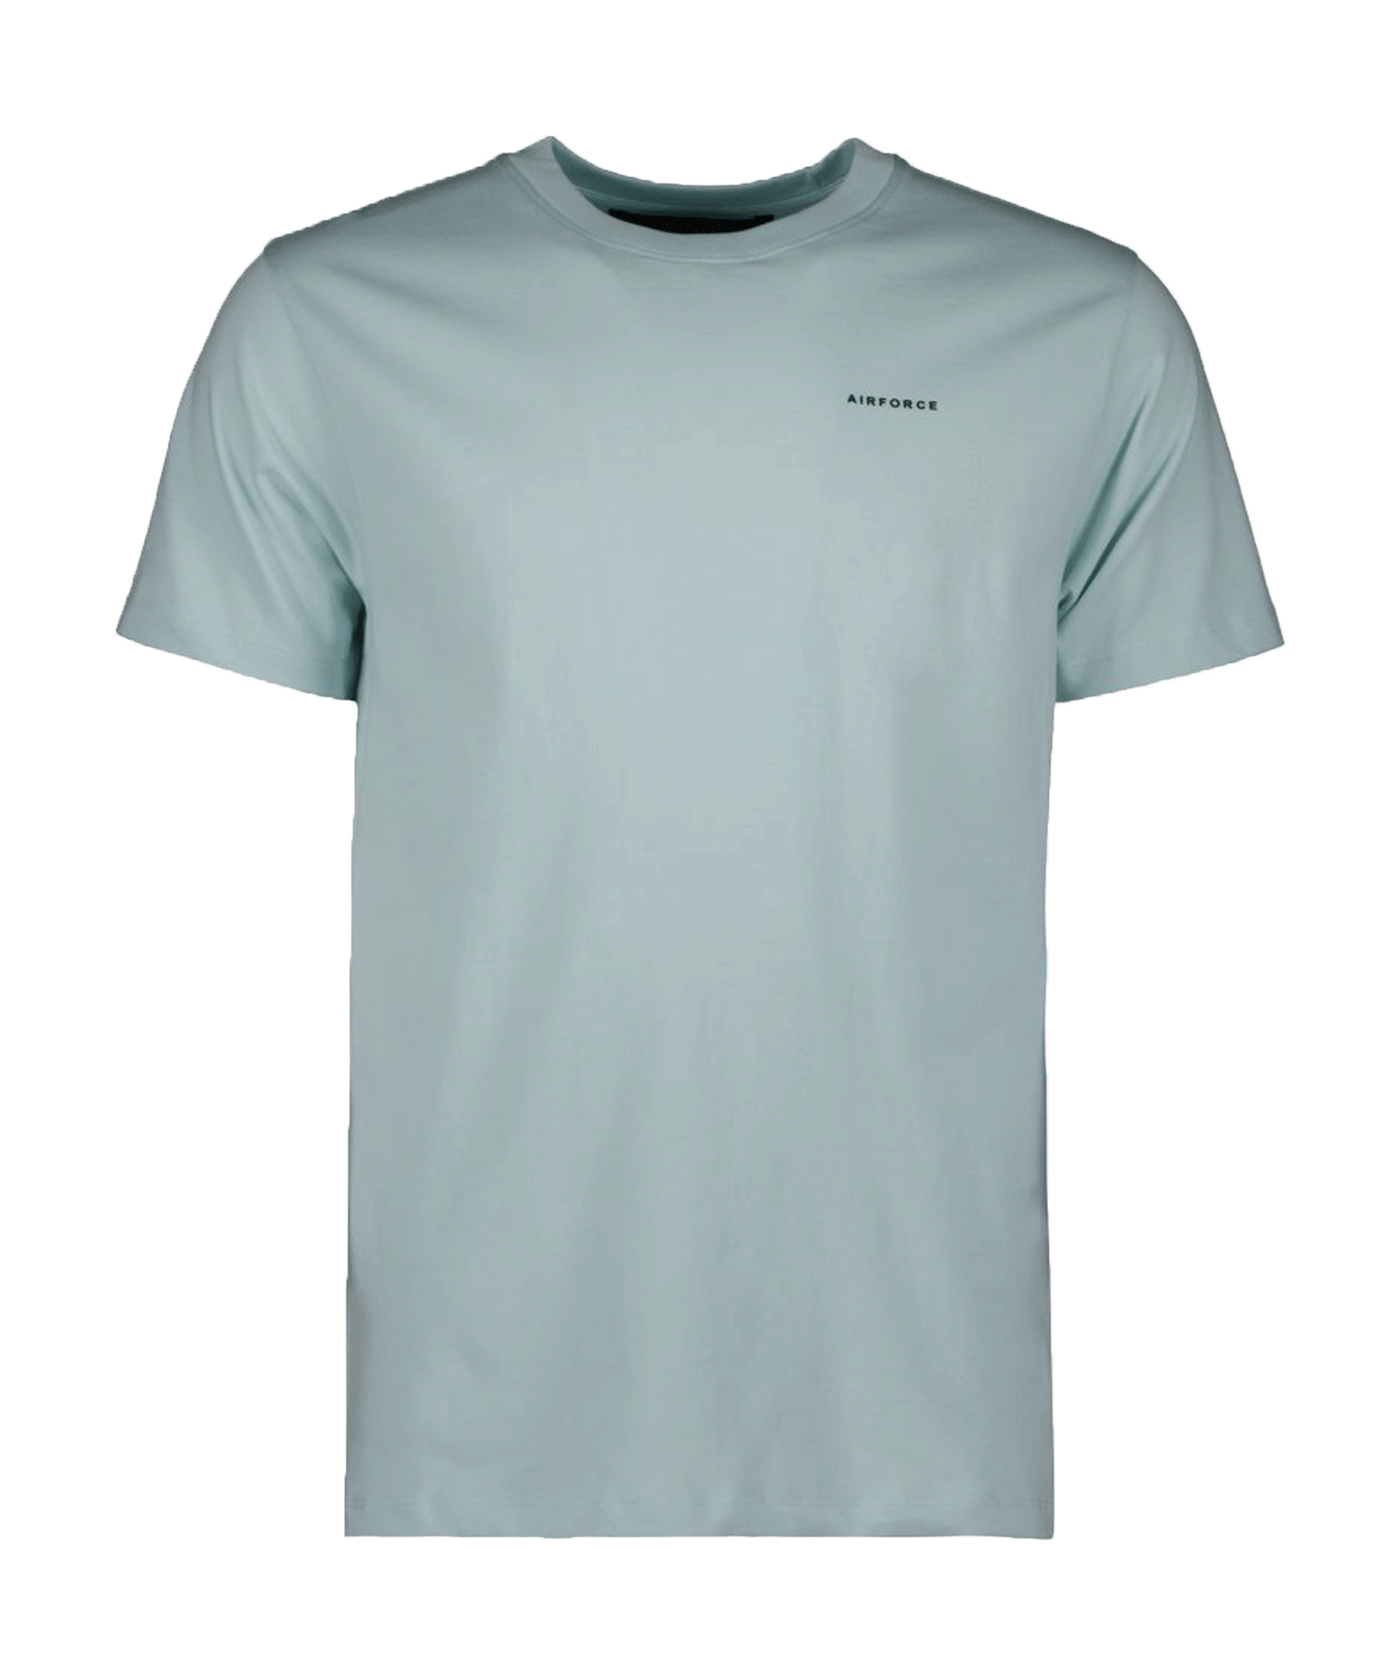 Airforce - Tbm0888 - Basic T-shirt - 525/901 Pastel Blue